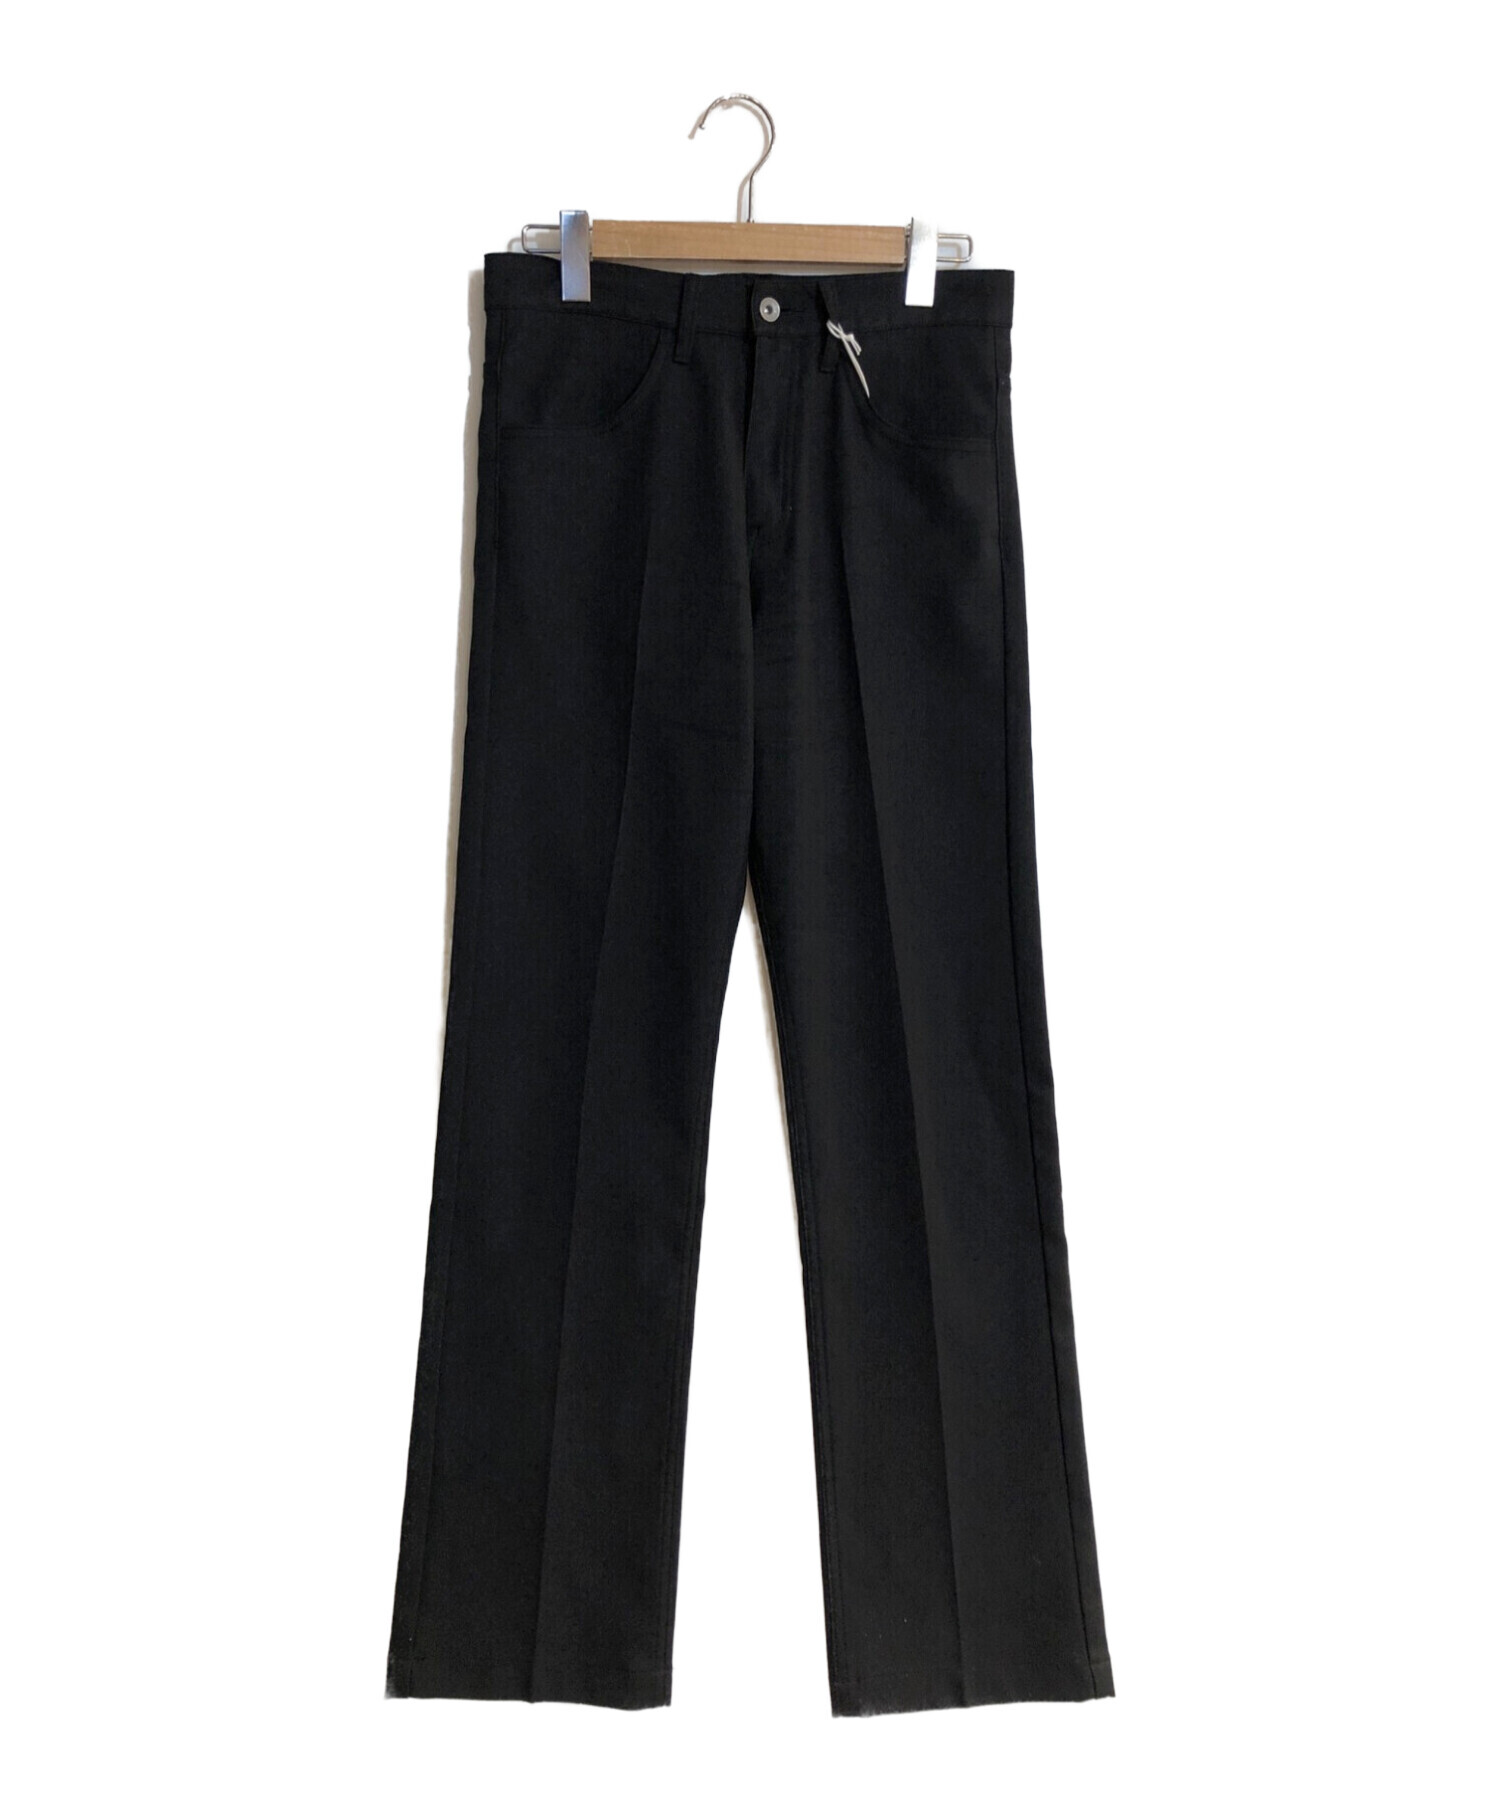 DAIRIKU (ダイリク) Slim Flasher Pressed Pants/スリムフラッシャー プレス パンツ ブラック サイズ:27